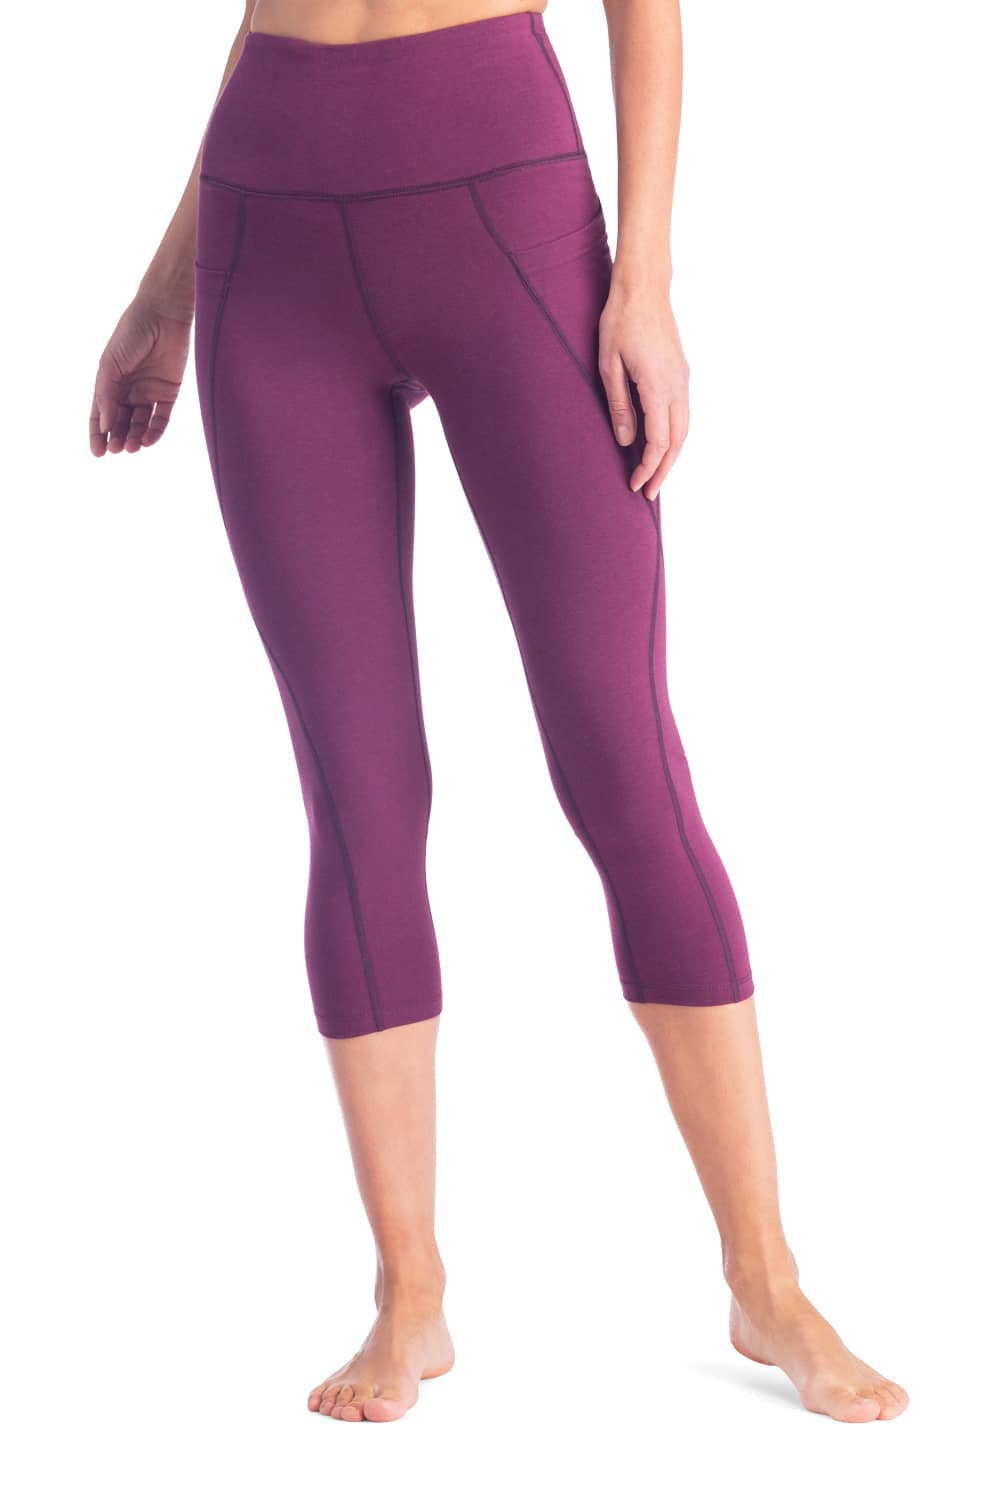 Women's High Waist Capri Pocket Yoga Pants - Frosted Grape